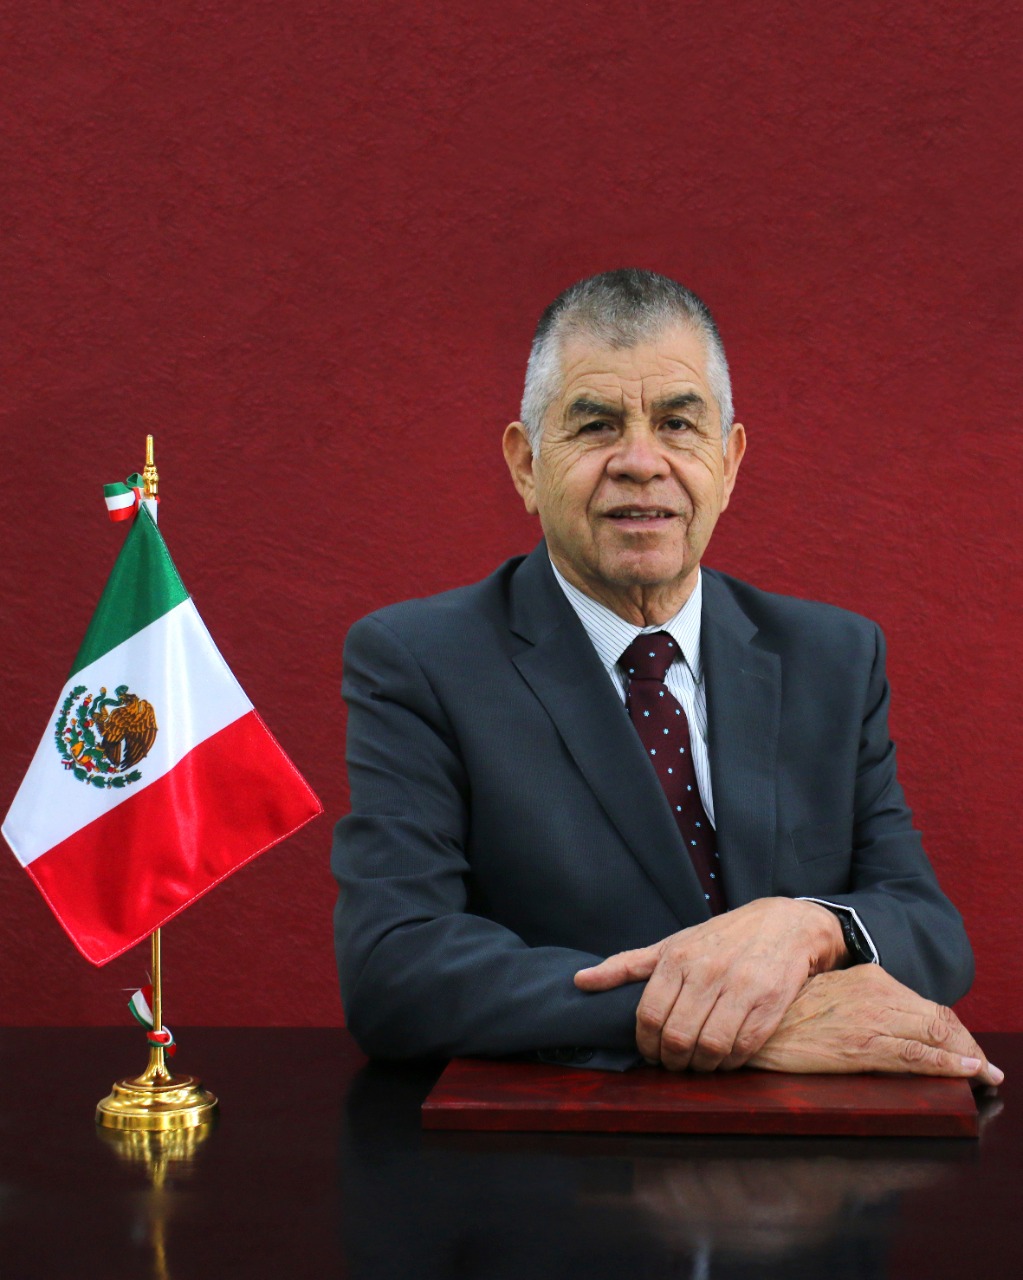 Rigoberto Cortés Melgoza